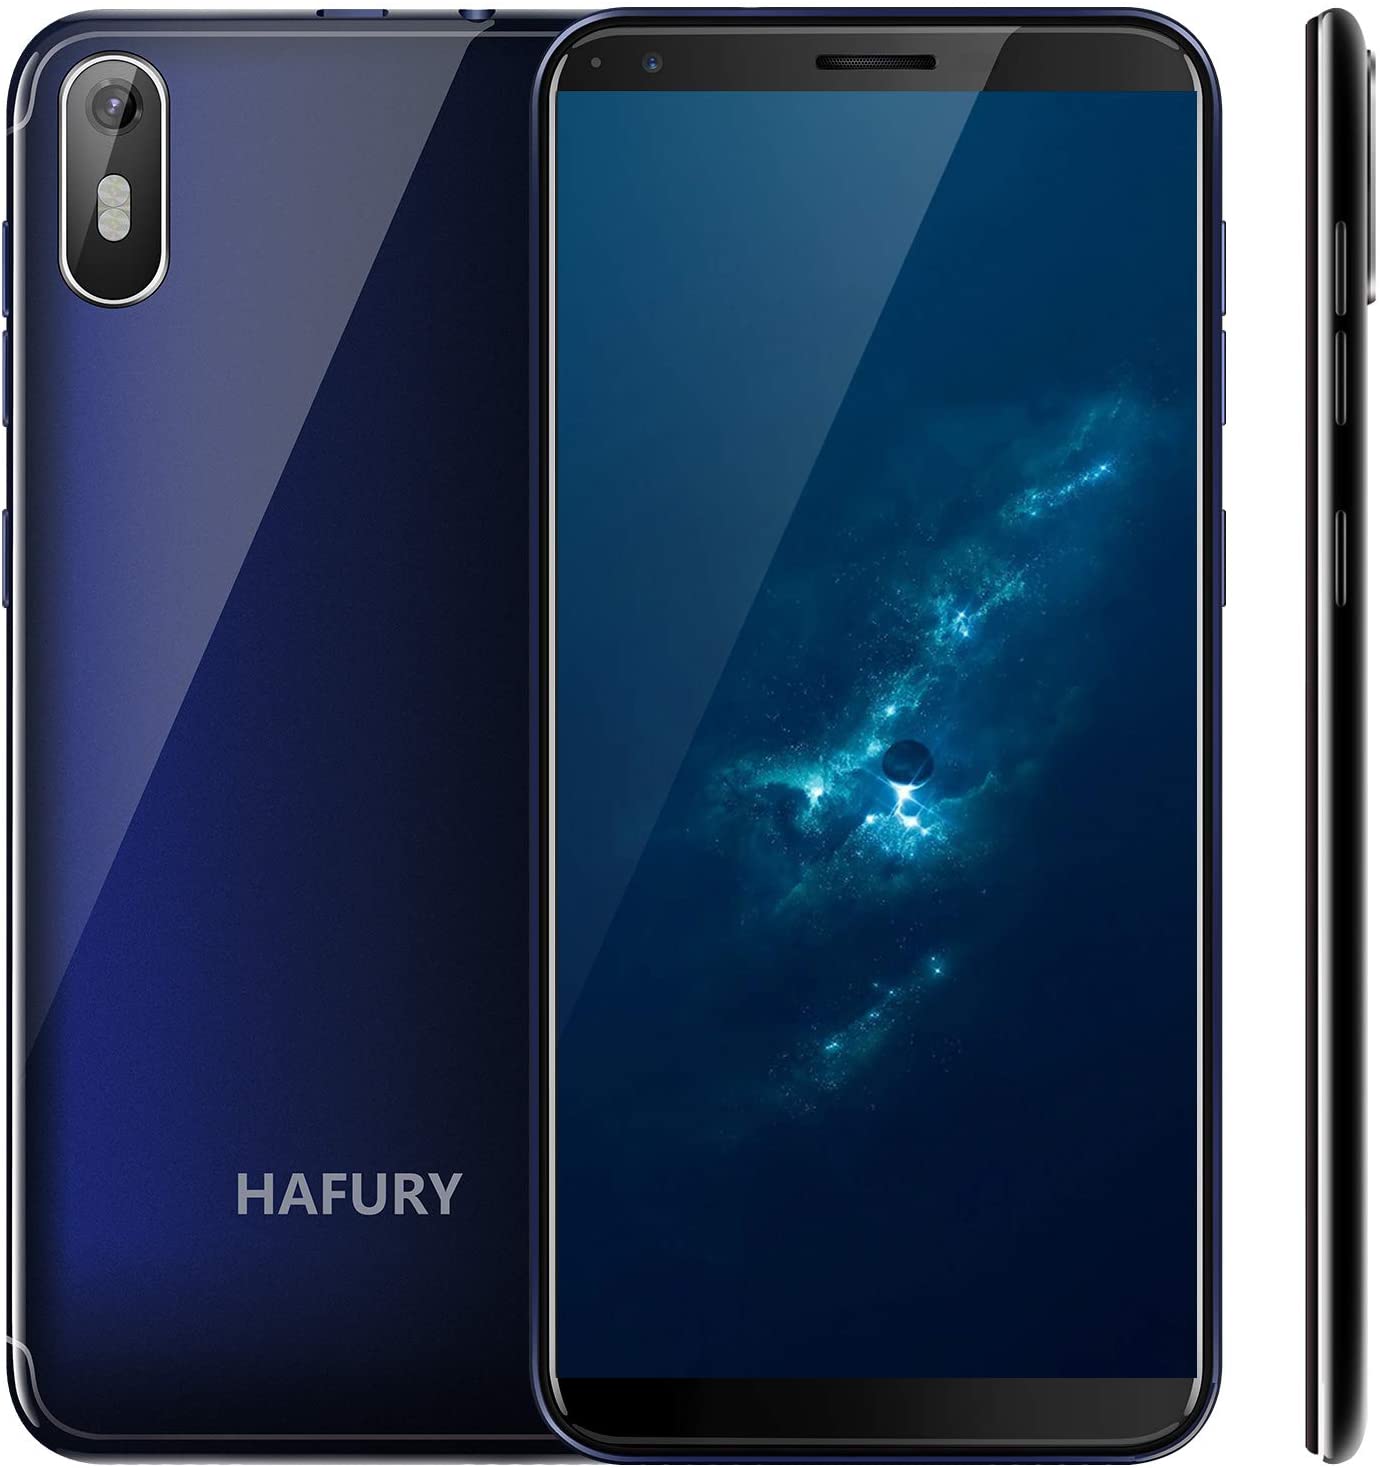 Hafury A7 Android 9.0 - Smartphone da 5.5''